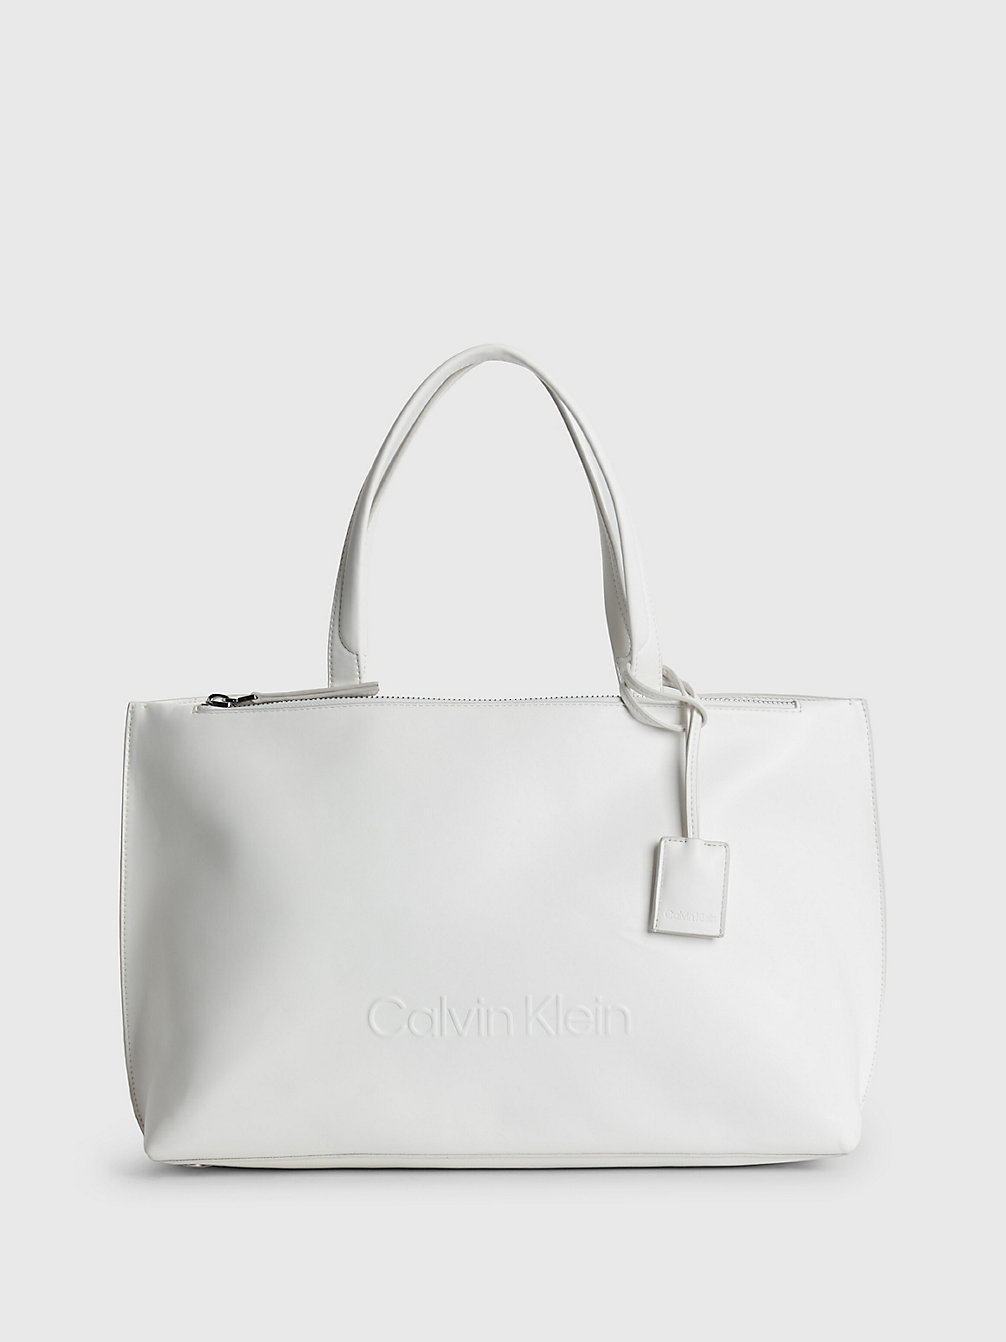 BRIGHT WHITE Sac Cabas Recyclé undefined femmes Calvin Klein